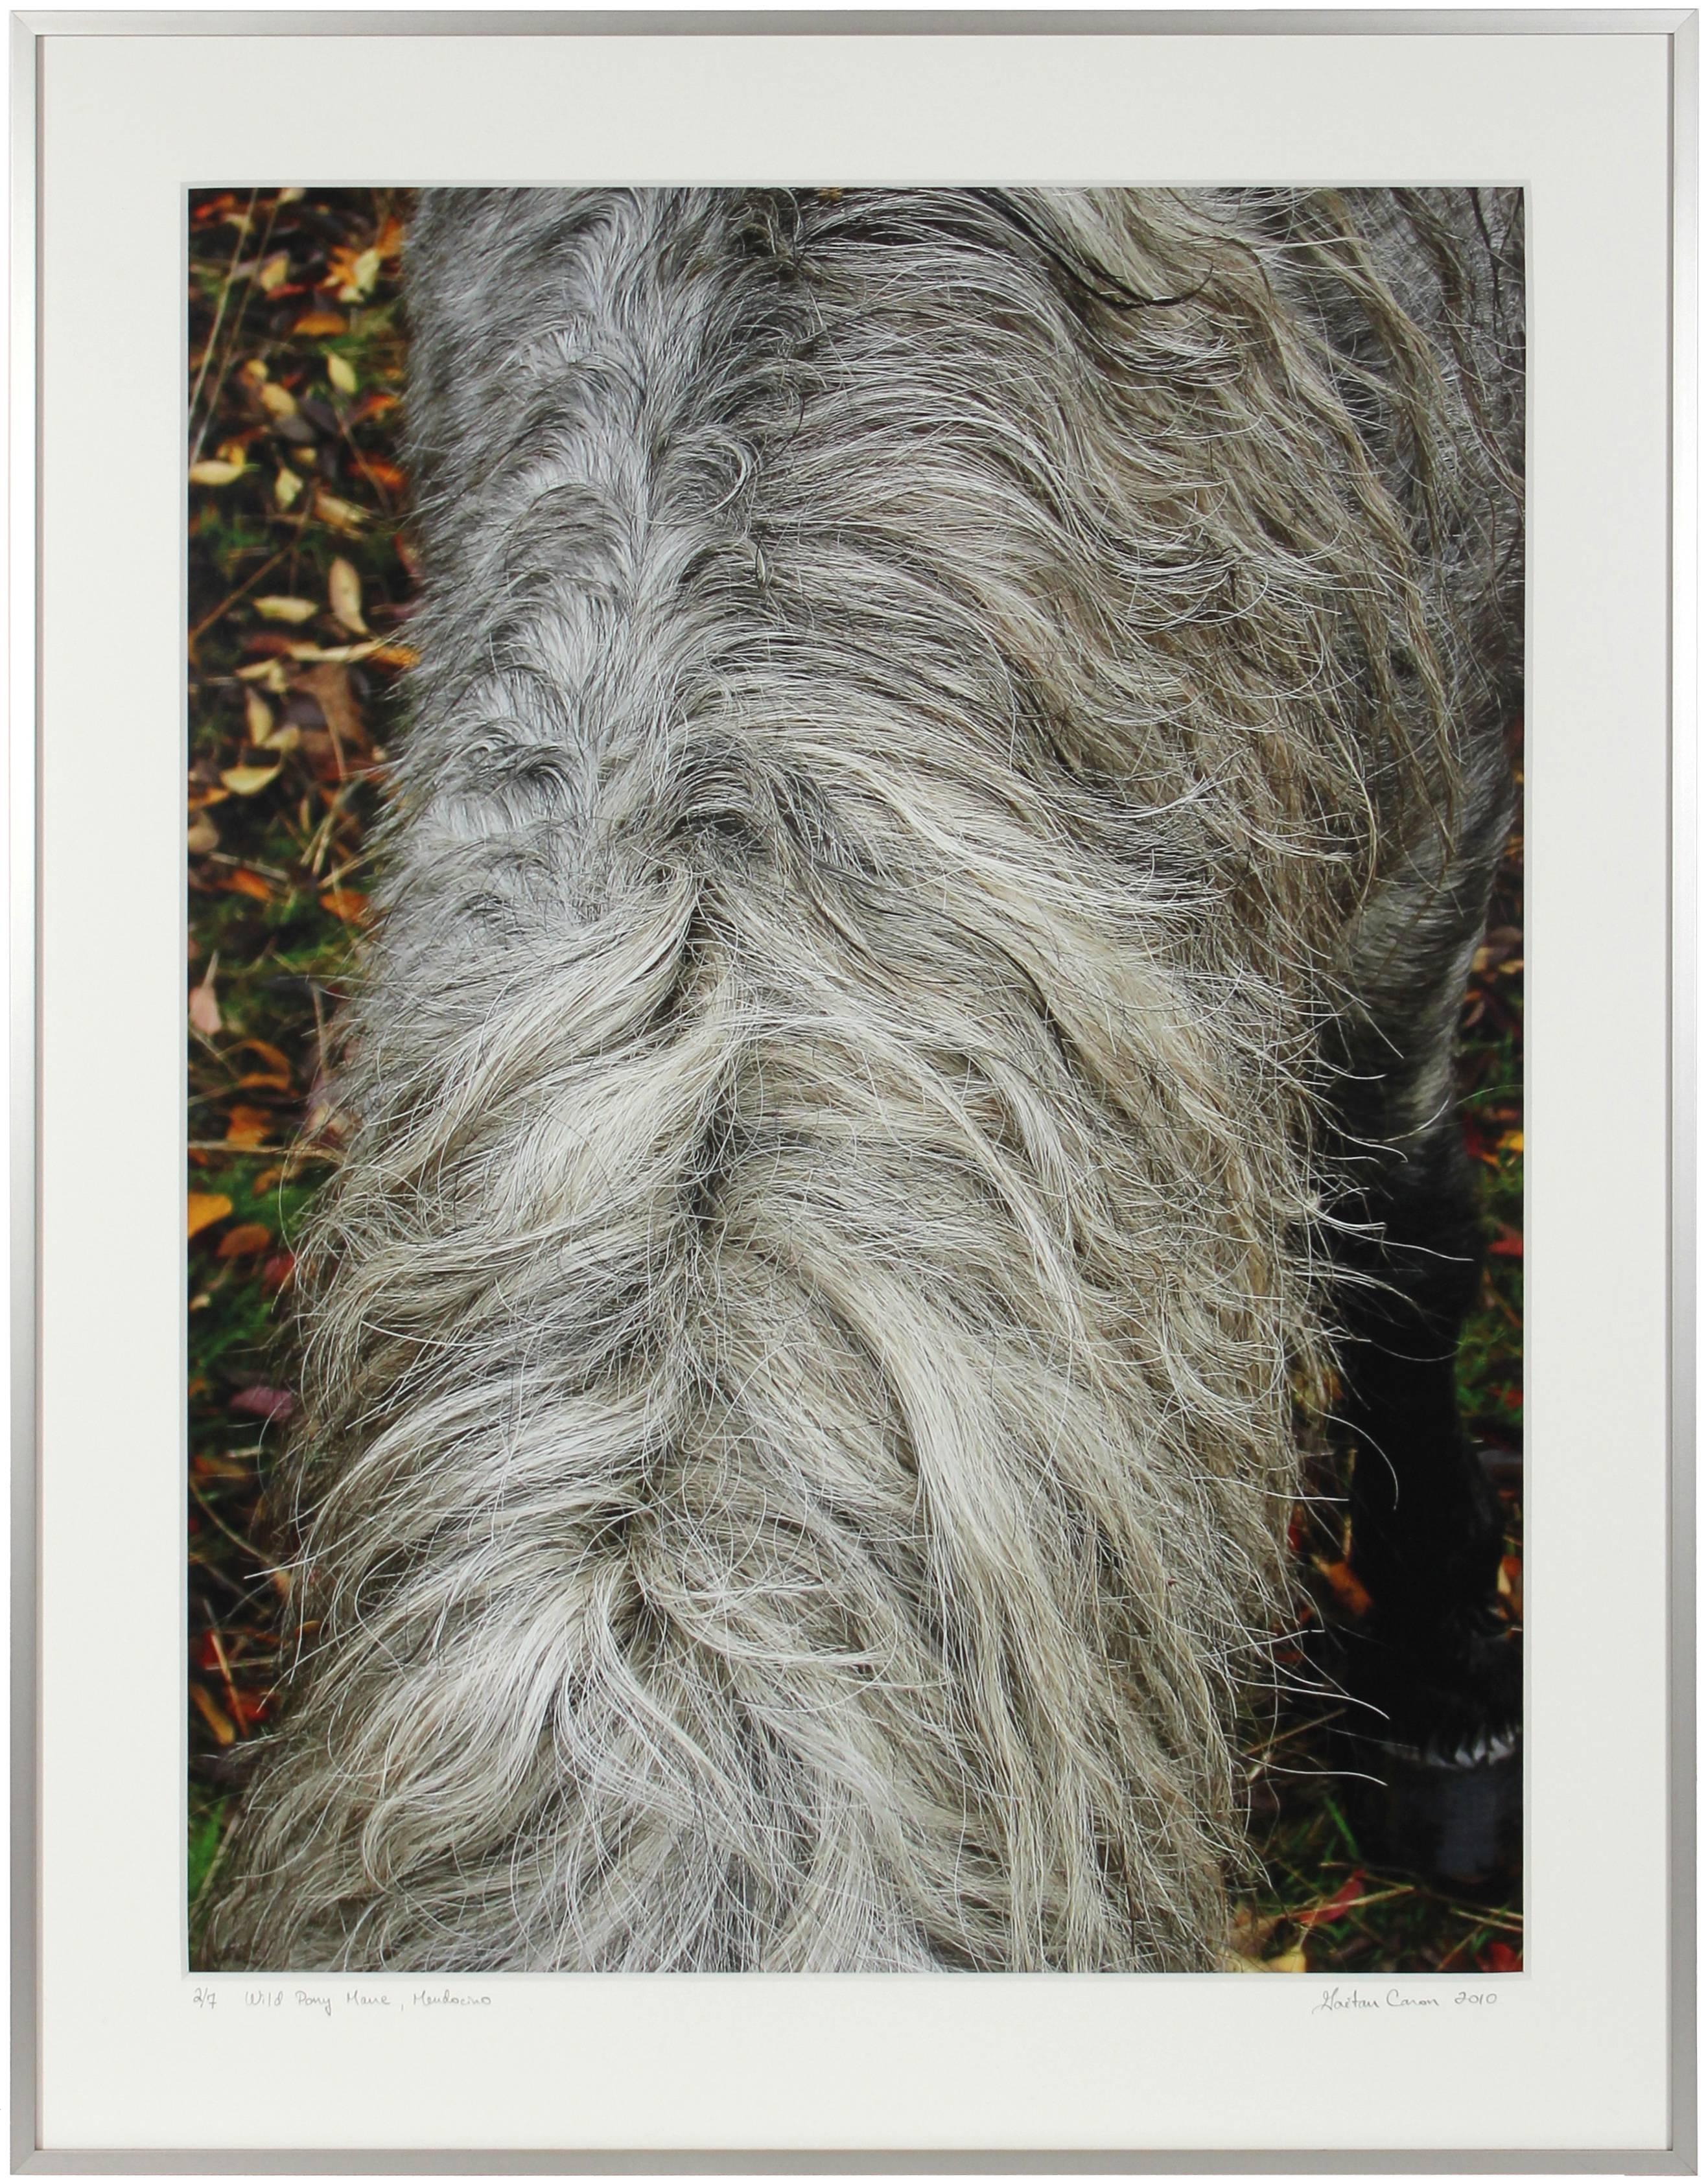 Gaétan Caron Still-Life Photograph - "Wild Pony Mane" Mendocino, CA Photograph, 2010